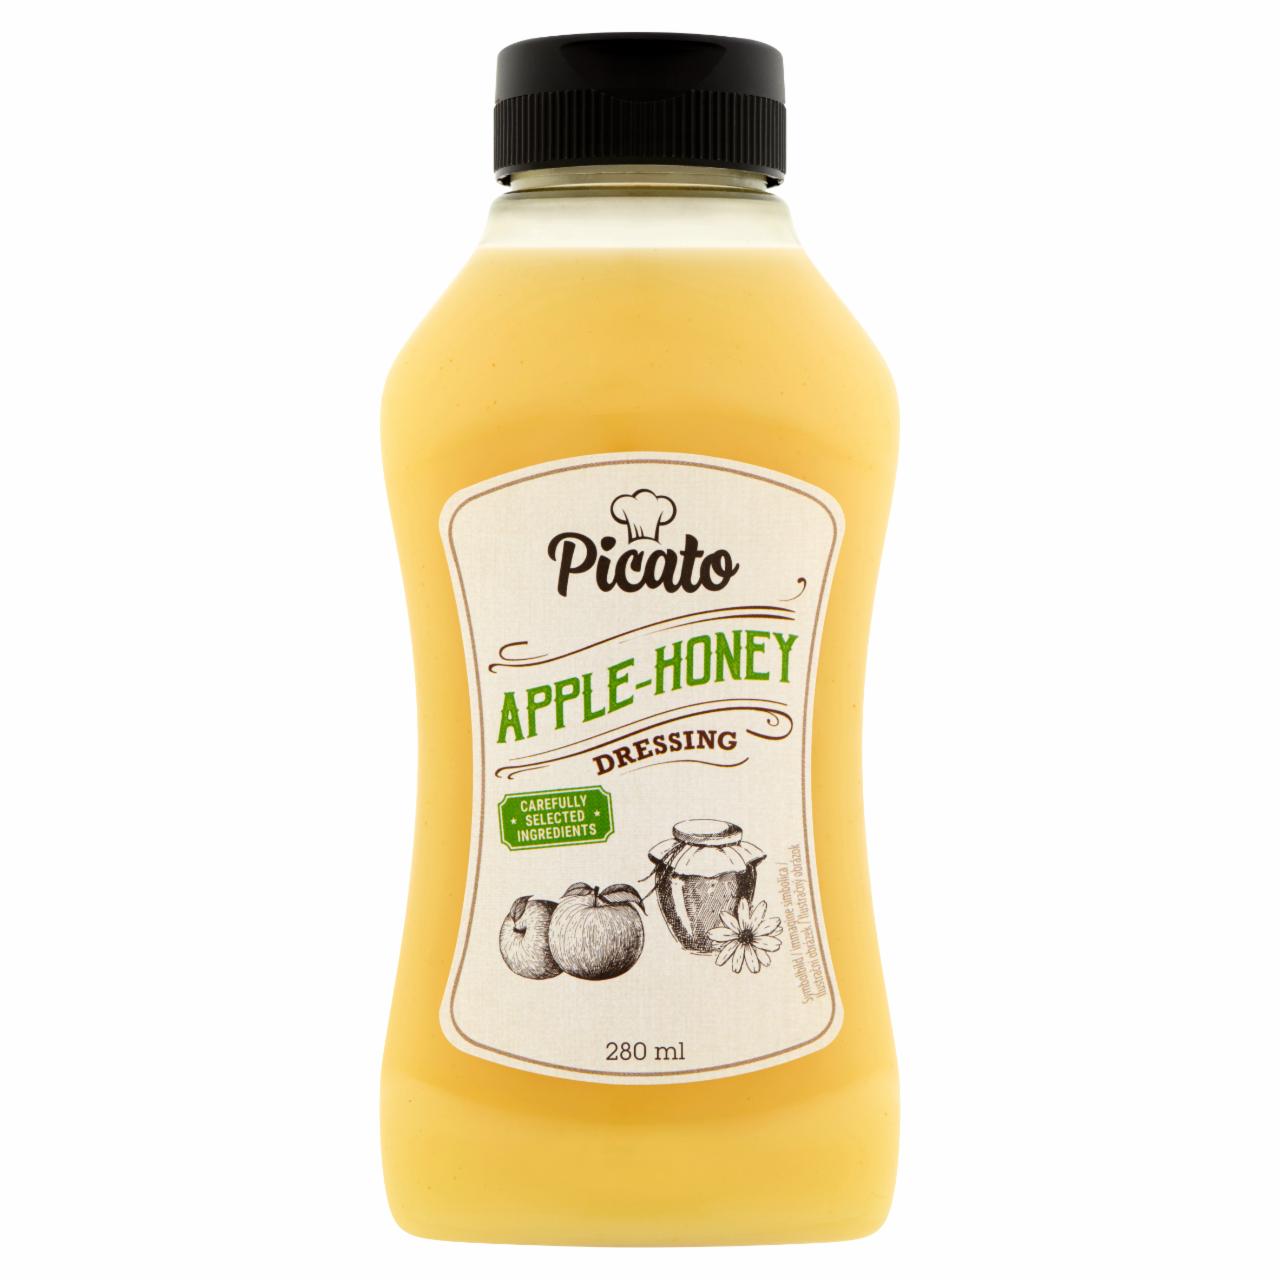 Photo - Picato Apple-Honey Dressing 280 ml